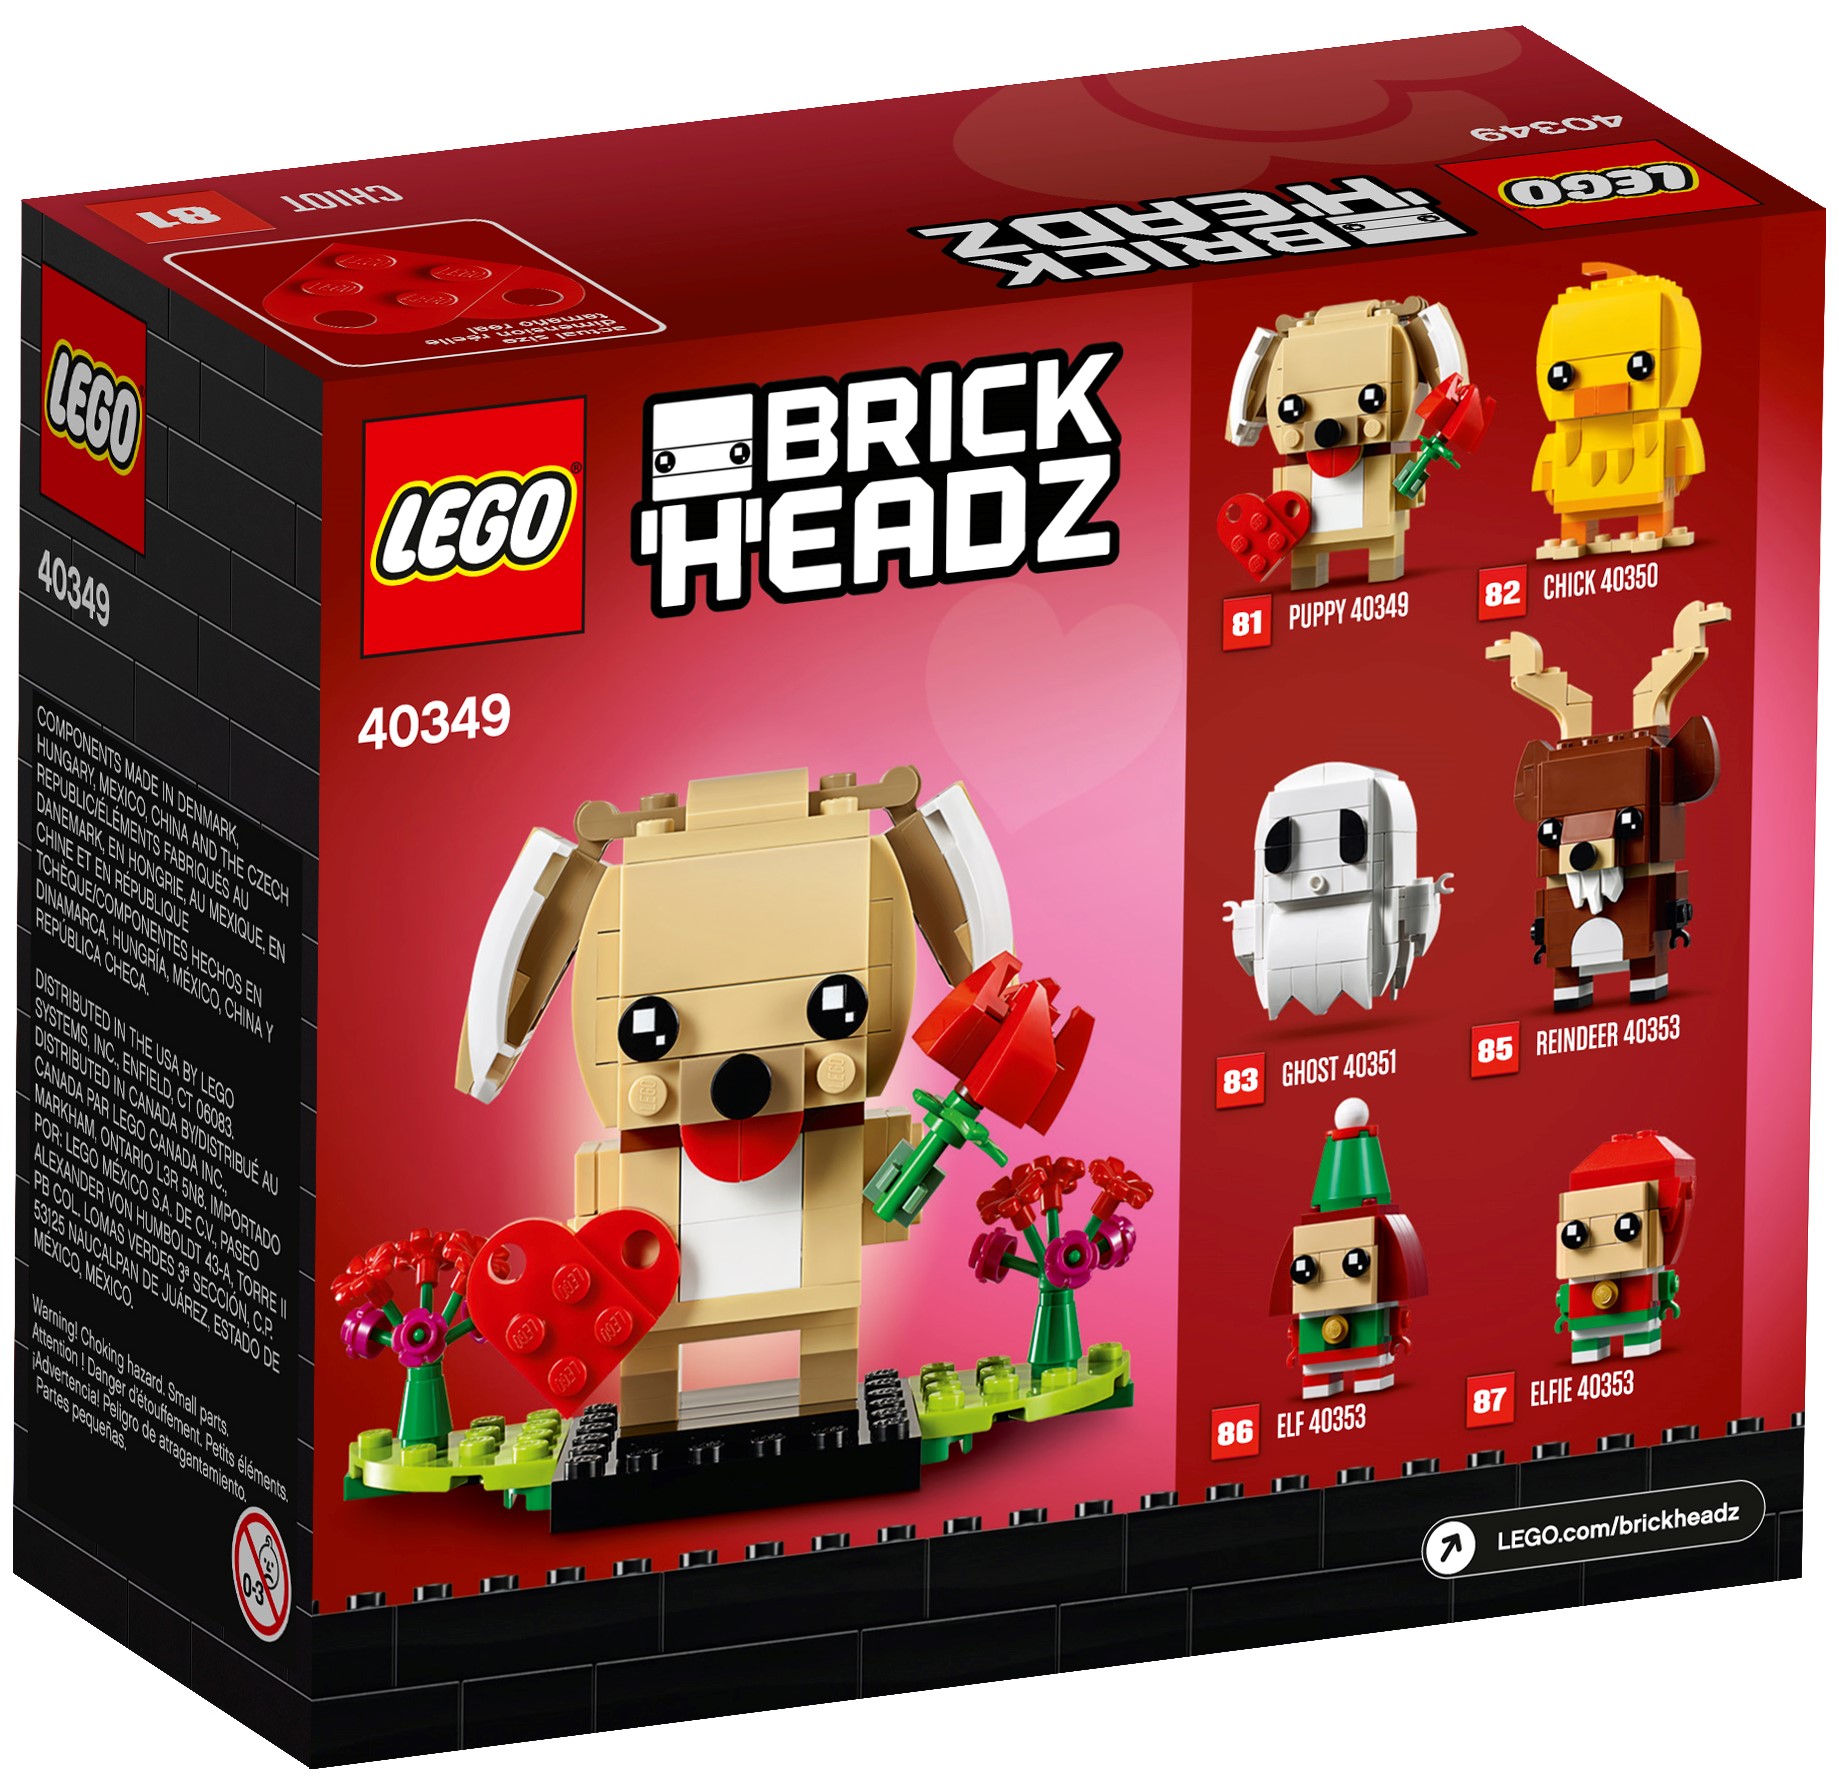 for sale online Lego BrickHeadz Valentine's Bear 40379